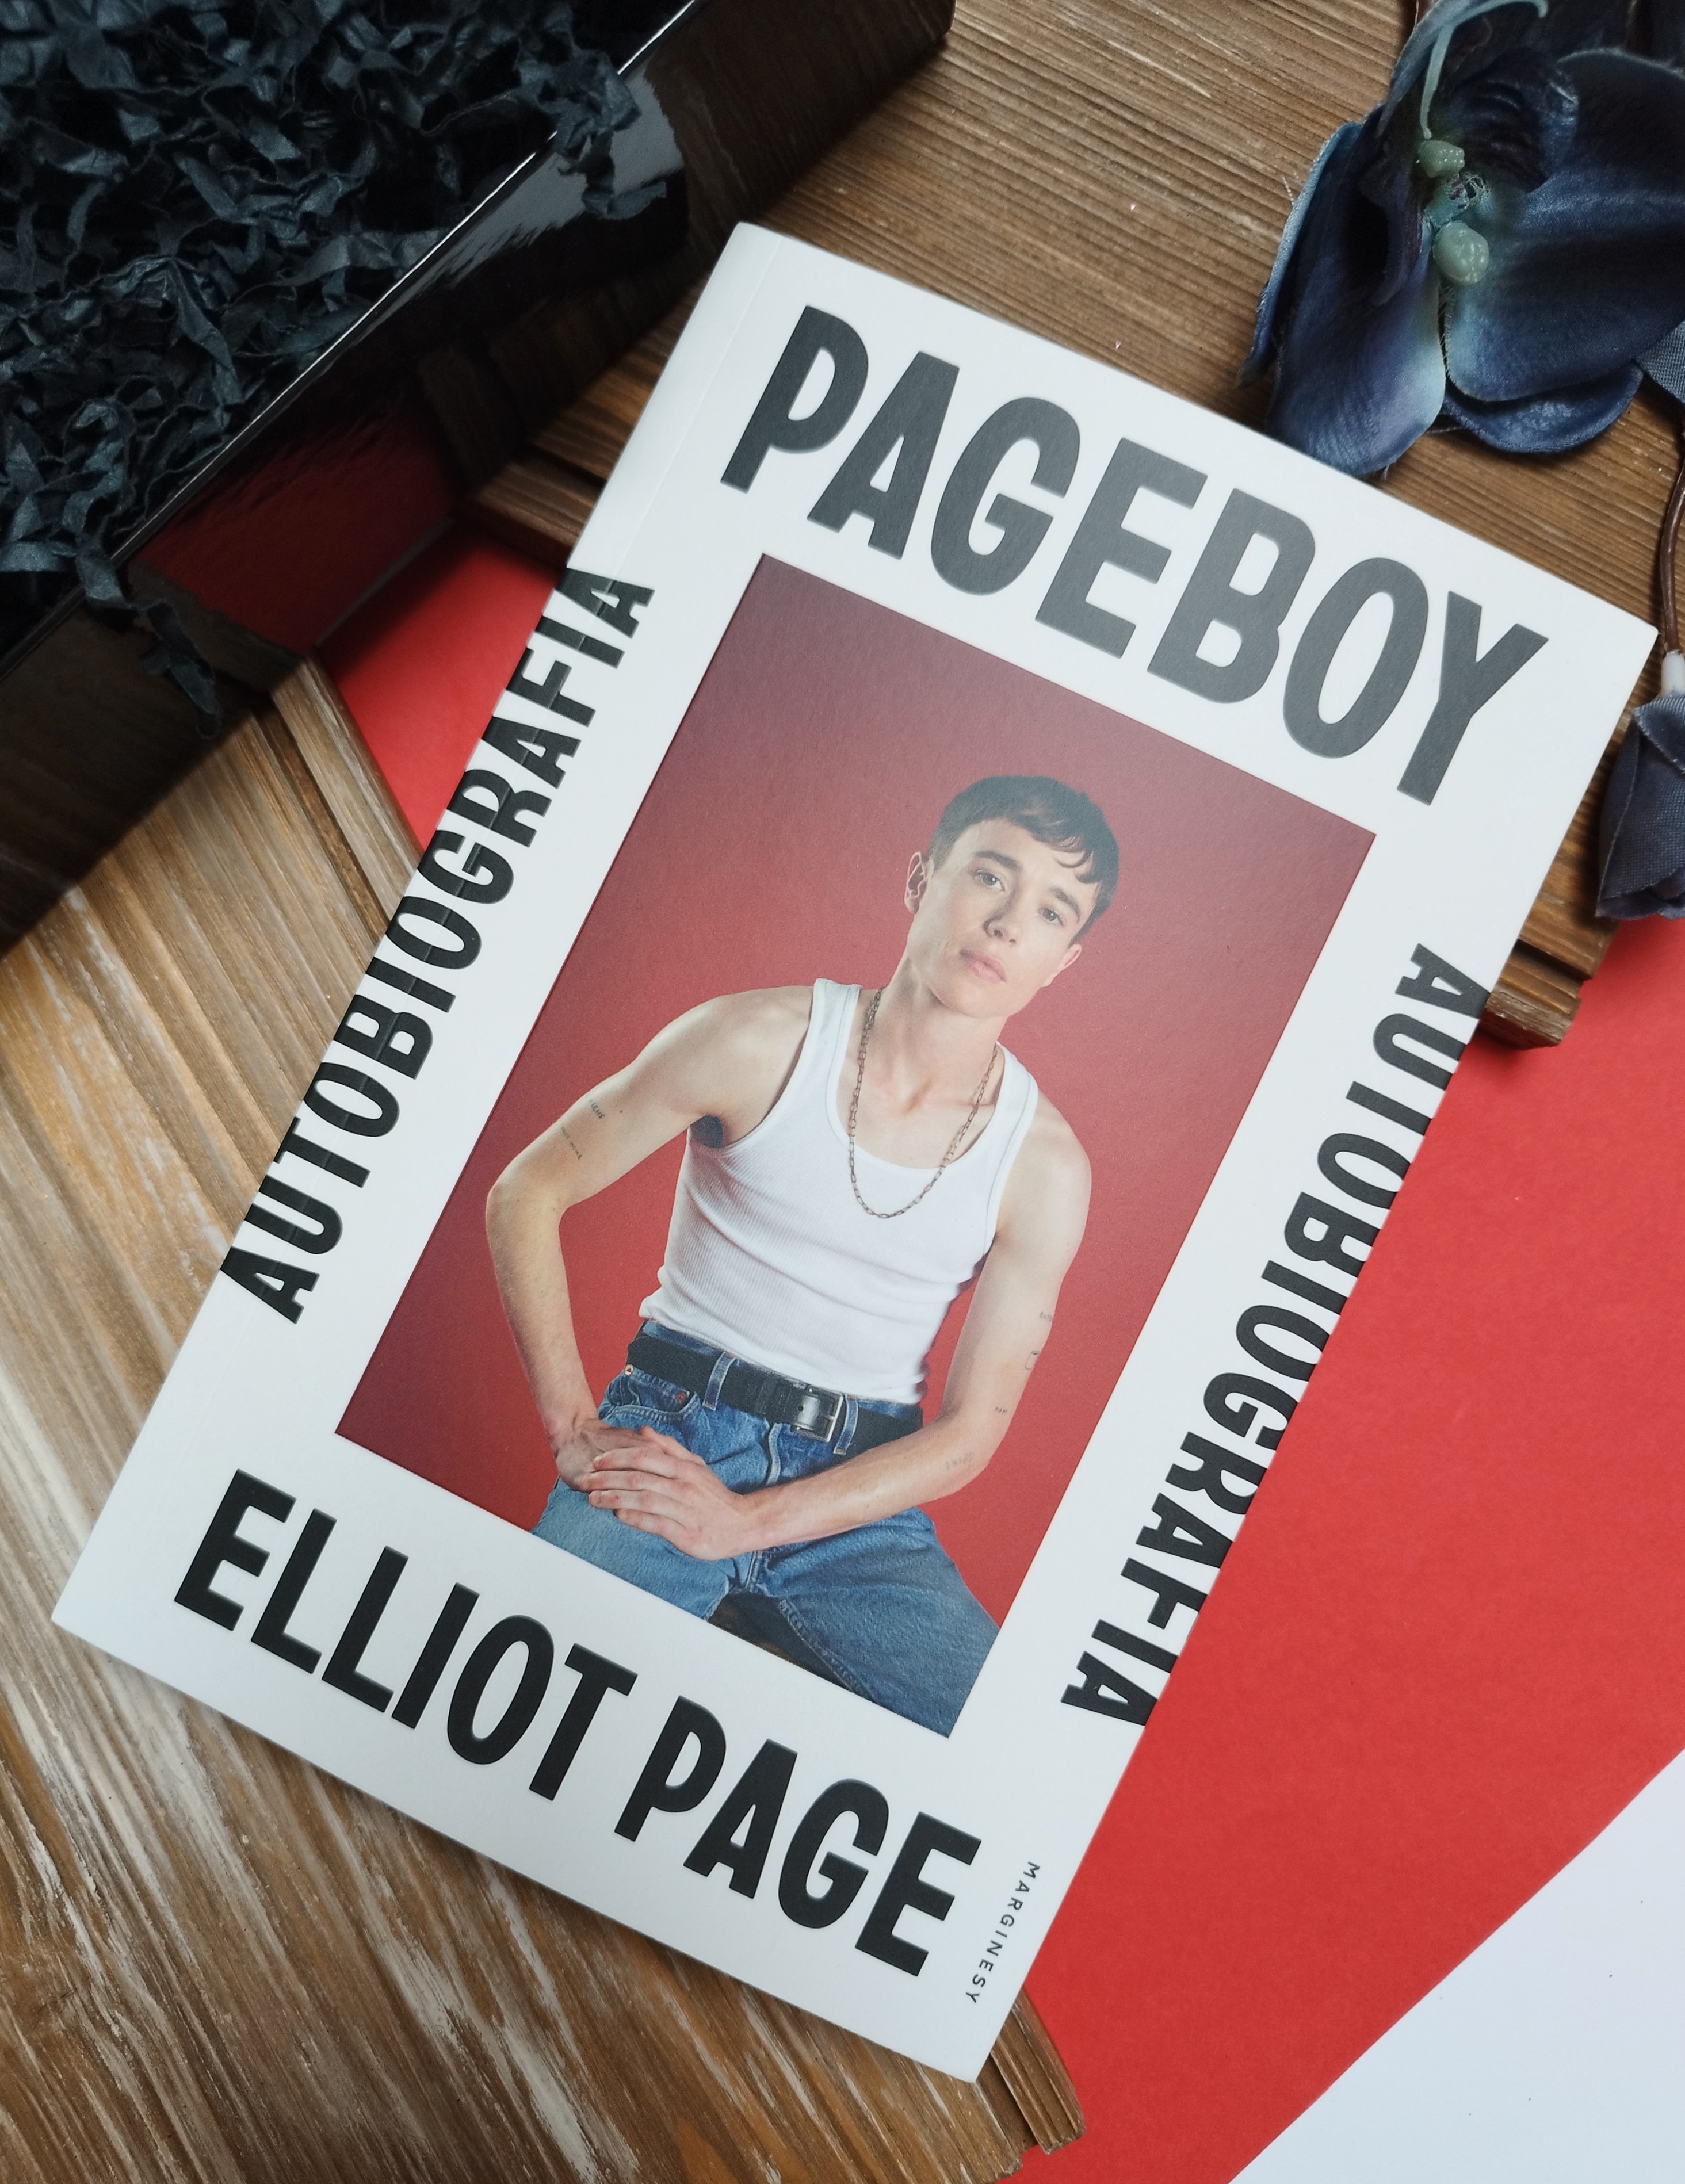 Autobiografia "Pageboy" Elliot Page